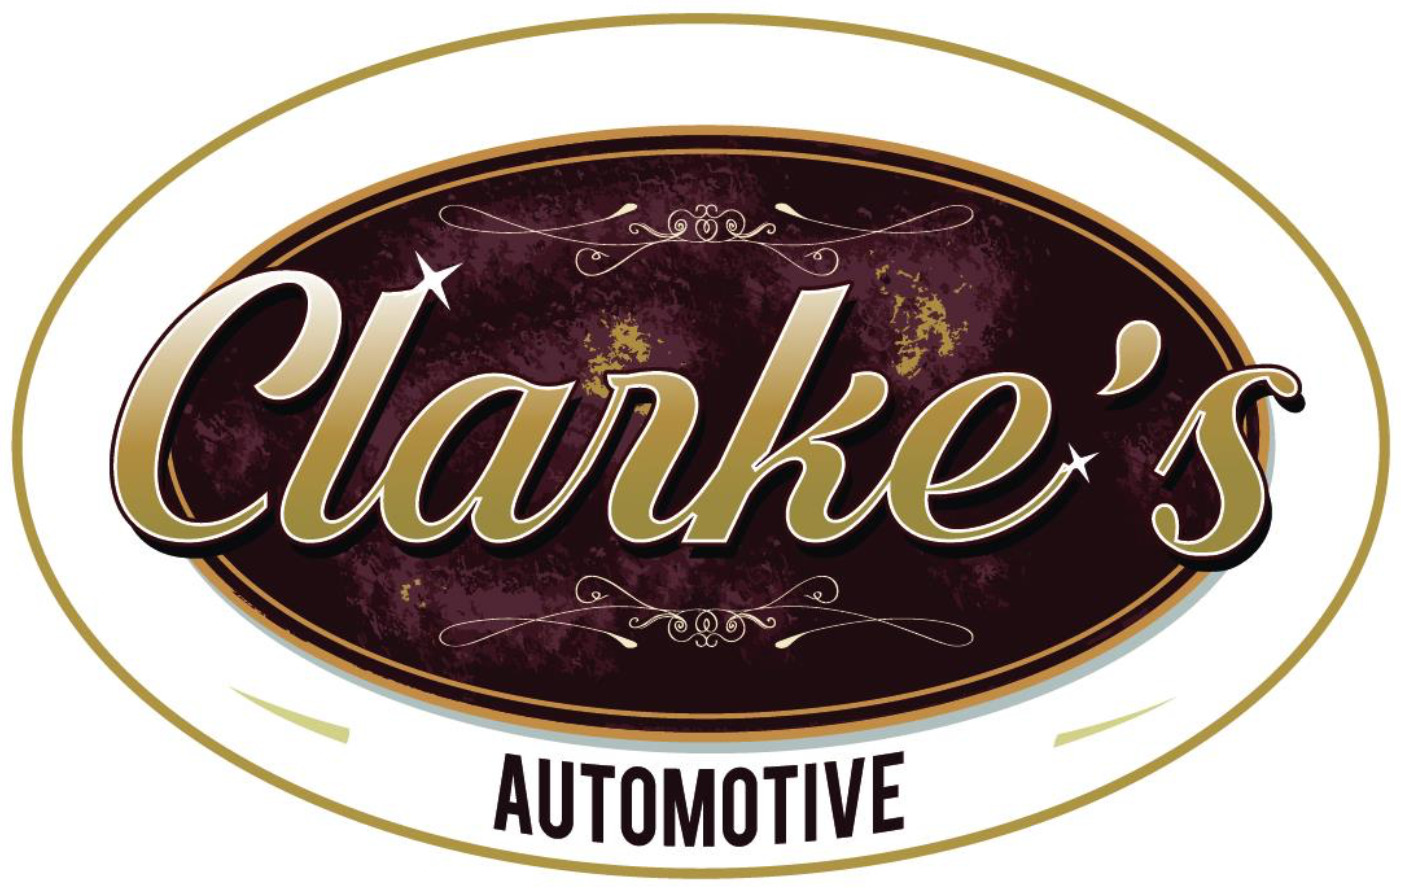 Clarke’s Automotive